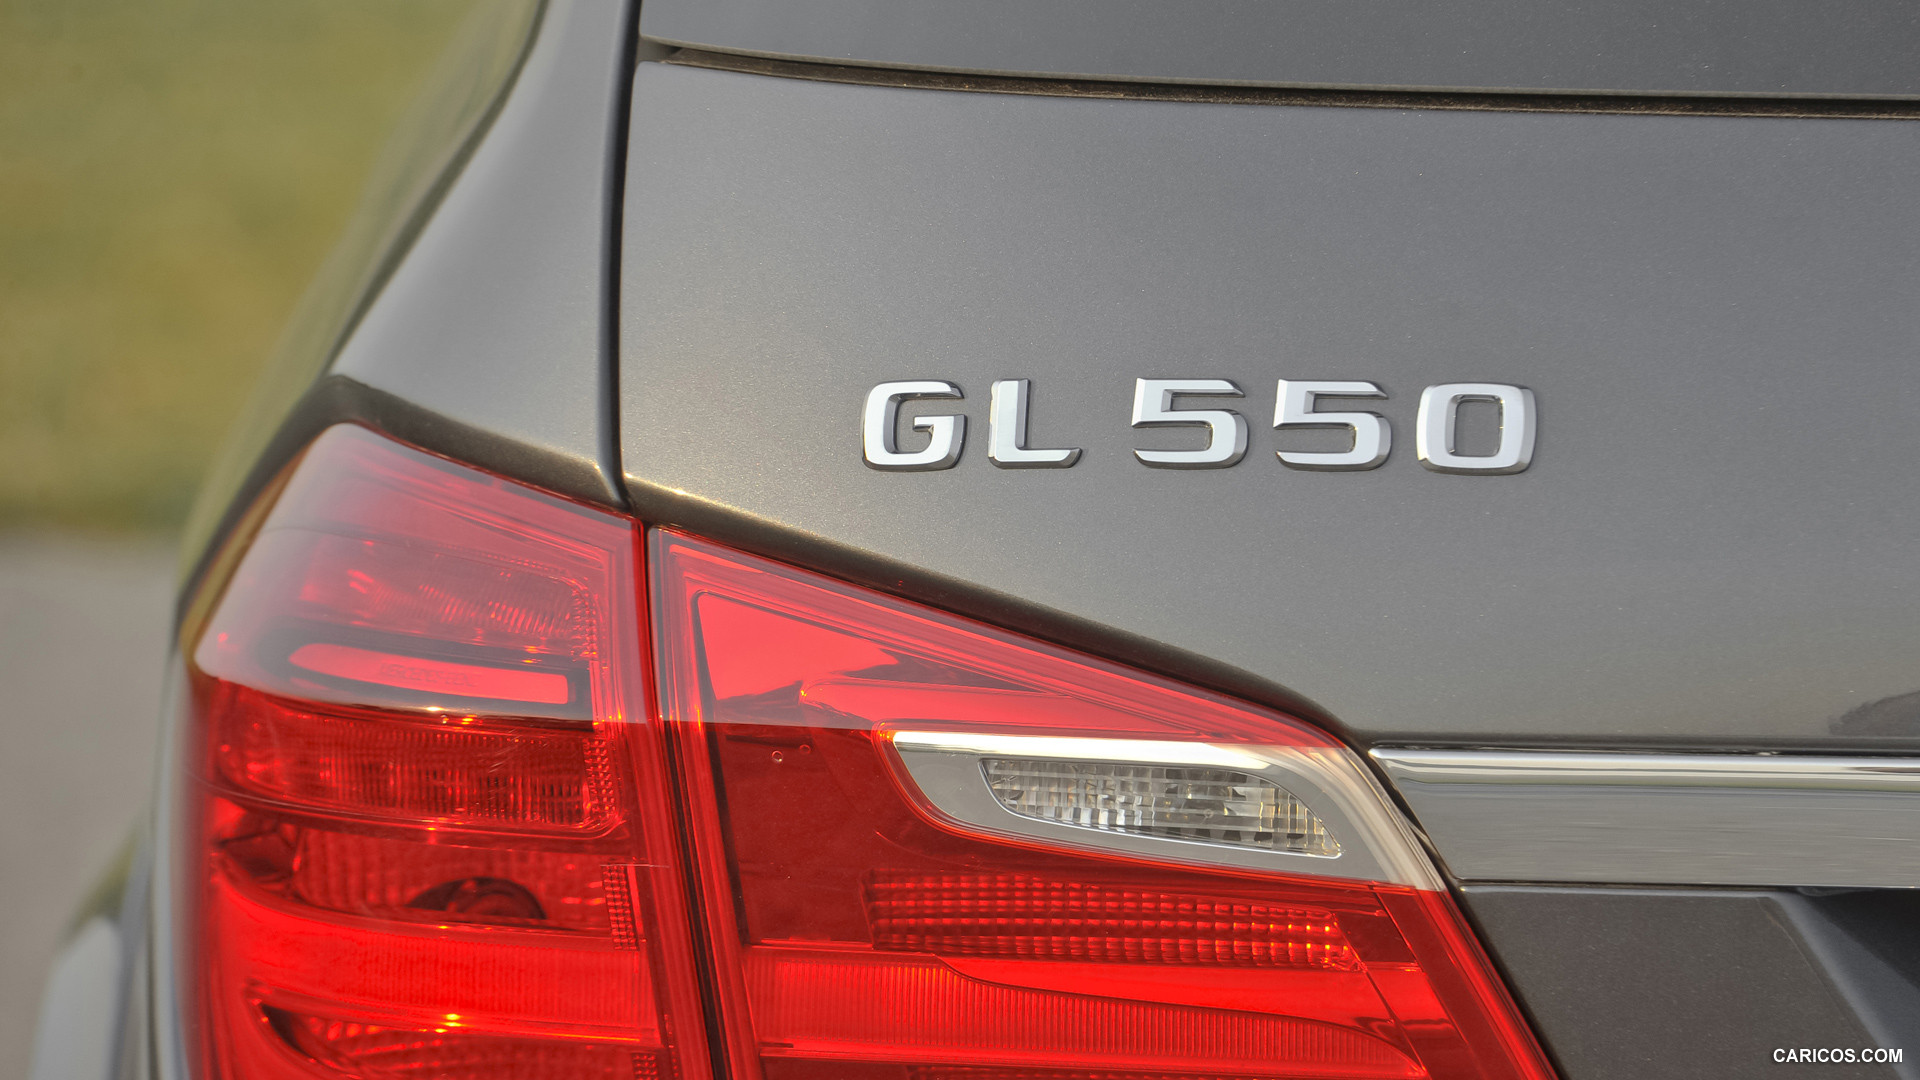 2013 Mercedes-Benz GL-Class GL550 - Badge, #27 of 259